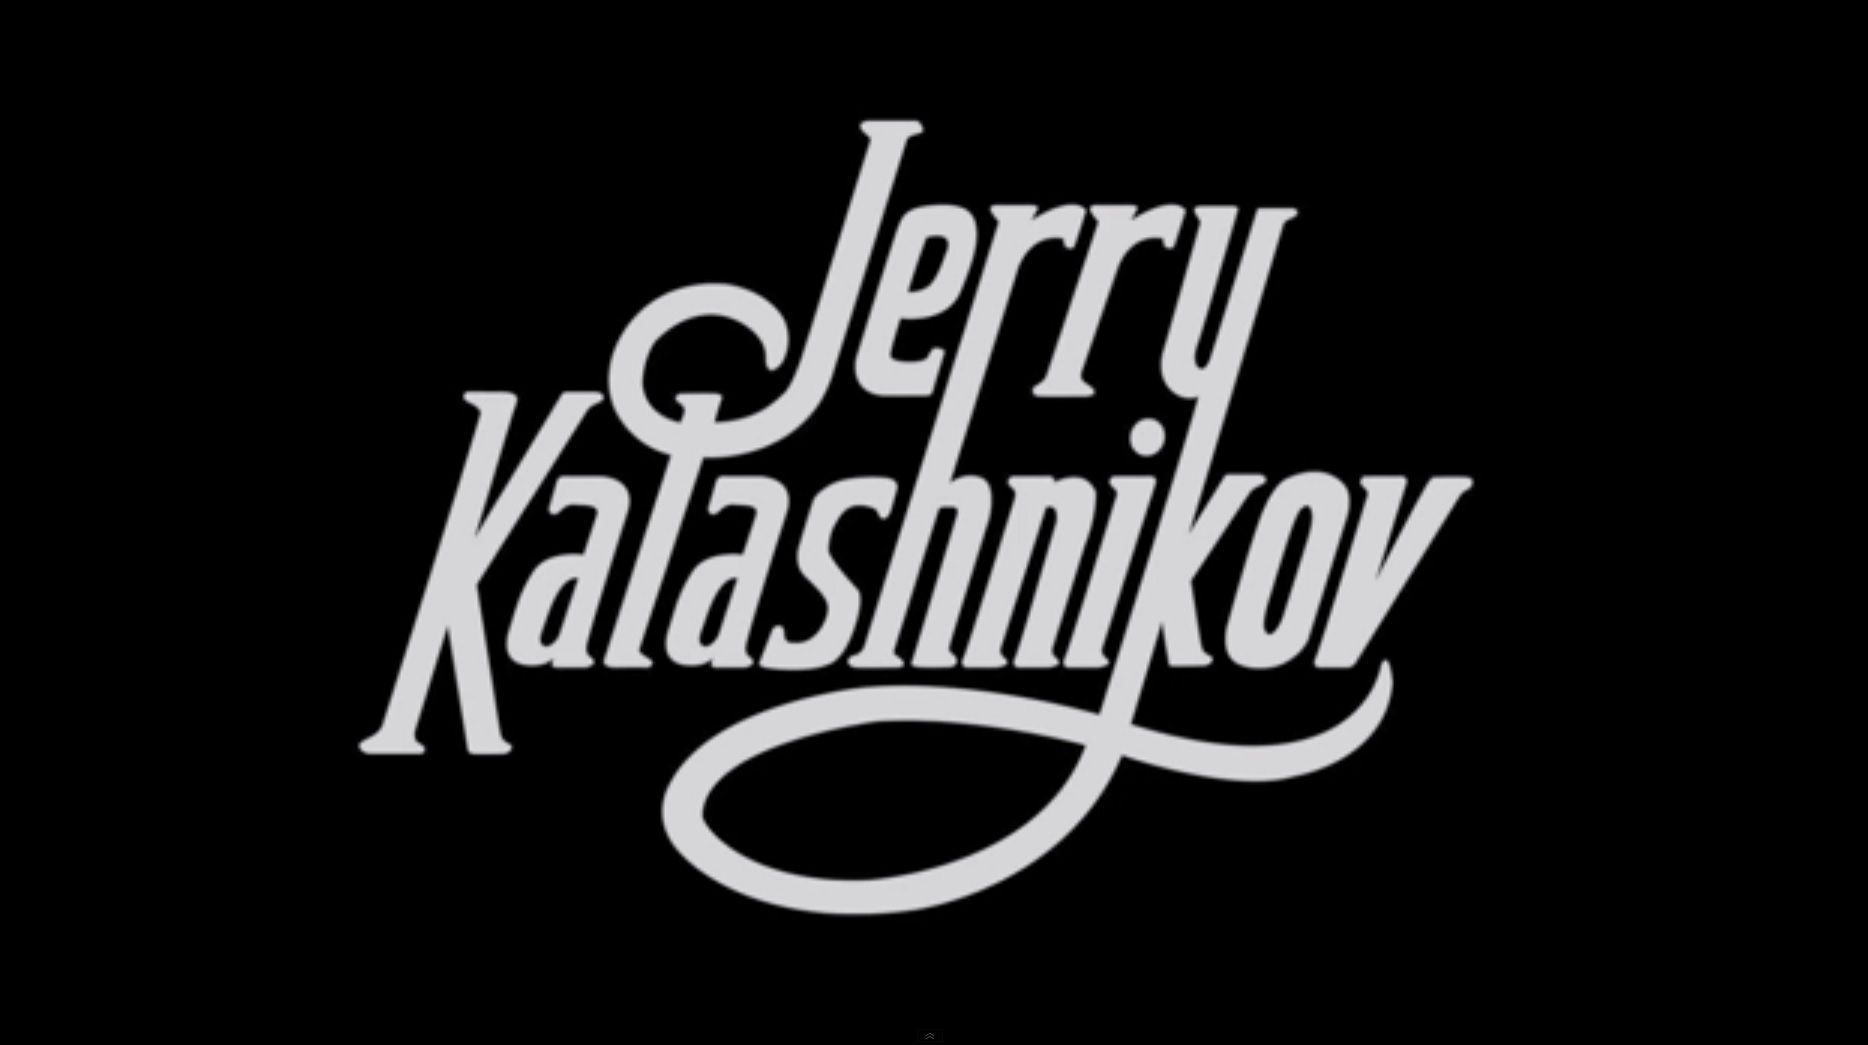 Jerry_Kalashnikov